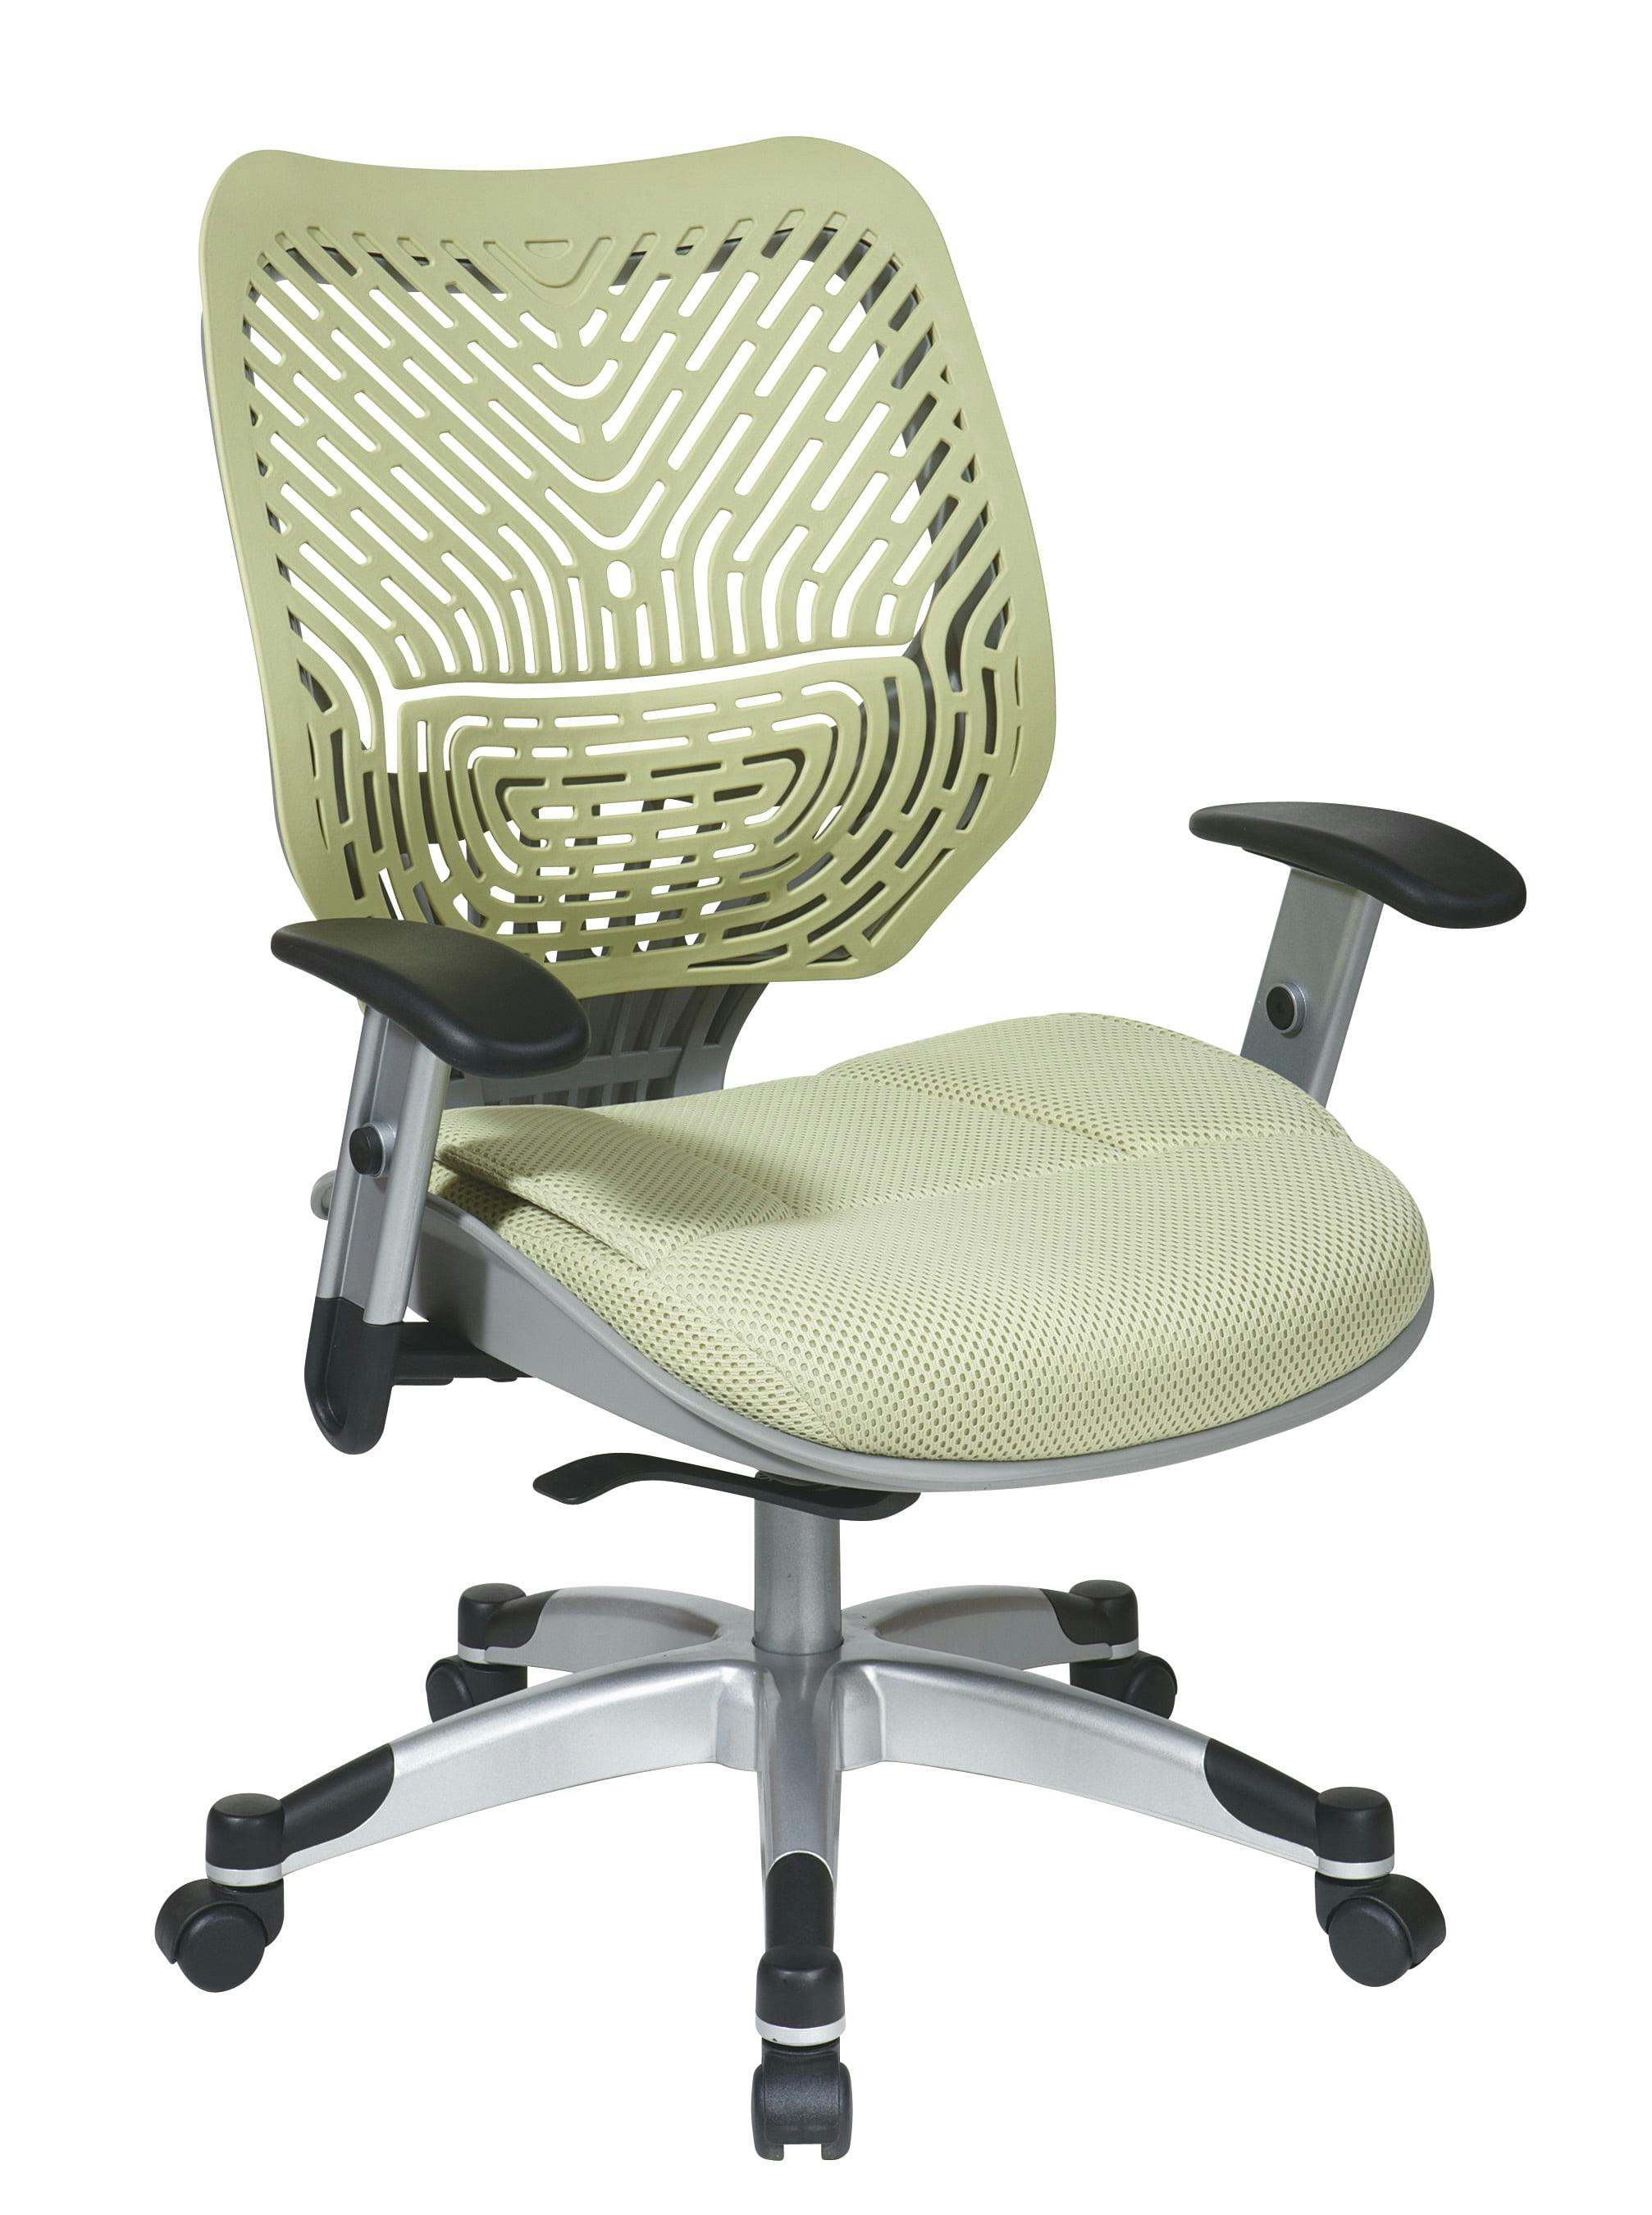 Kiwi Green SpaceFlex Adjustable Executive Office Chair